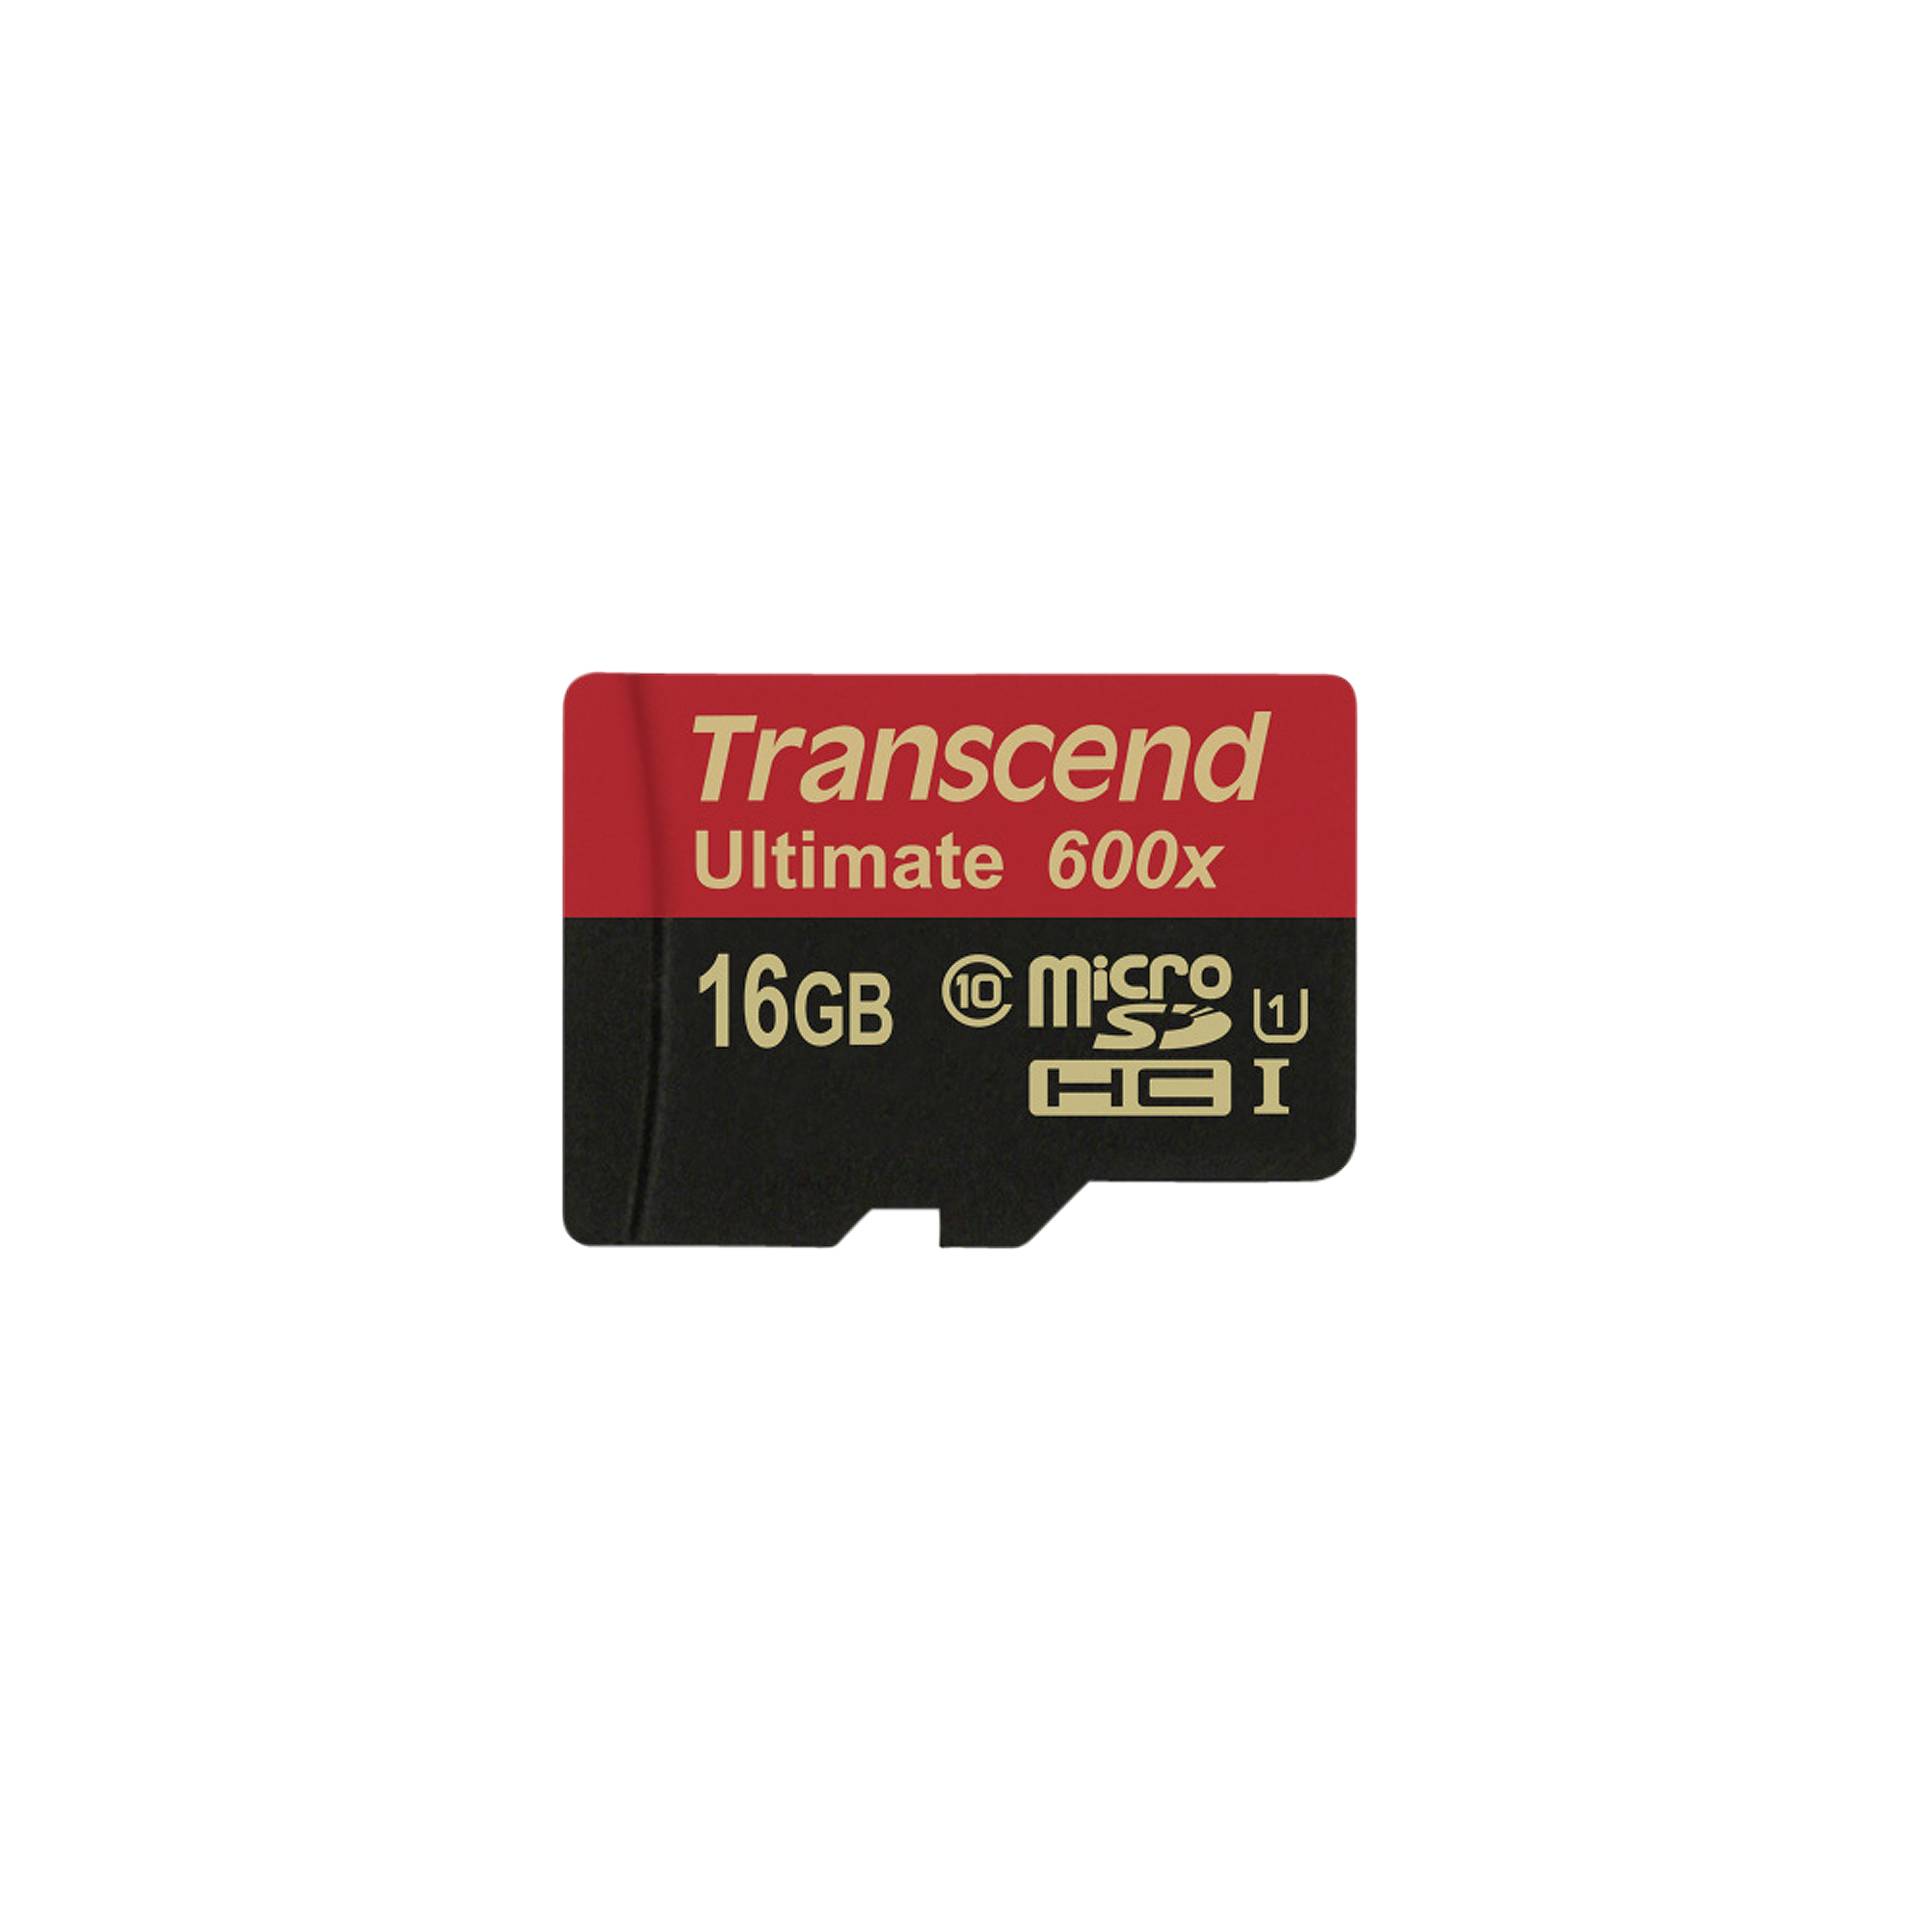 Transcend microSDHC 16GB Class 10 UHS-I MLC 600x + Adattat.S